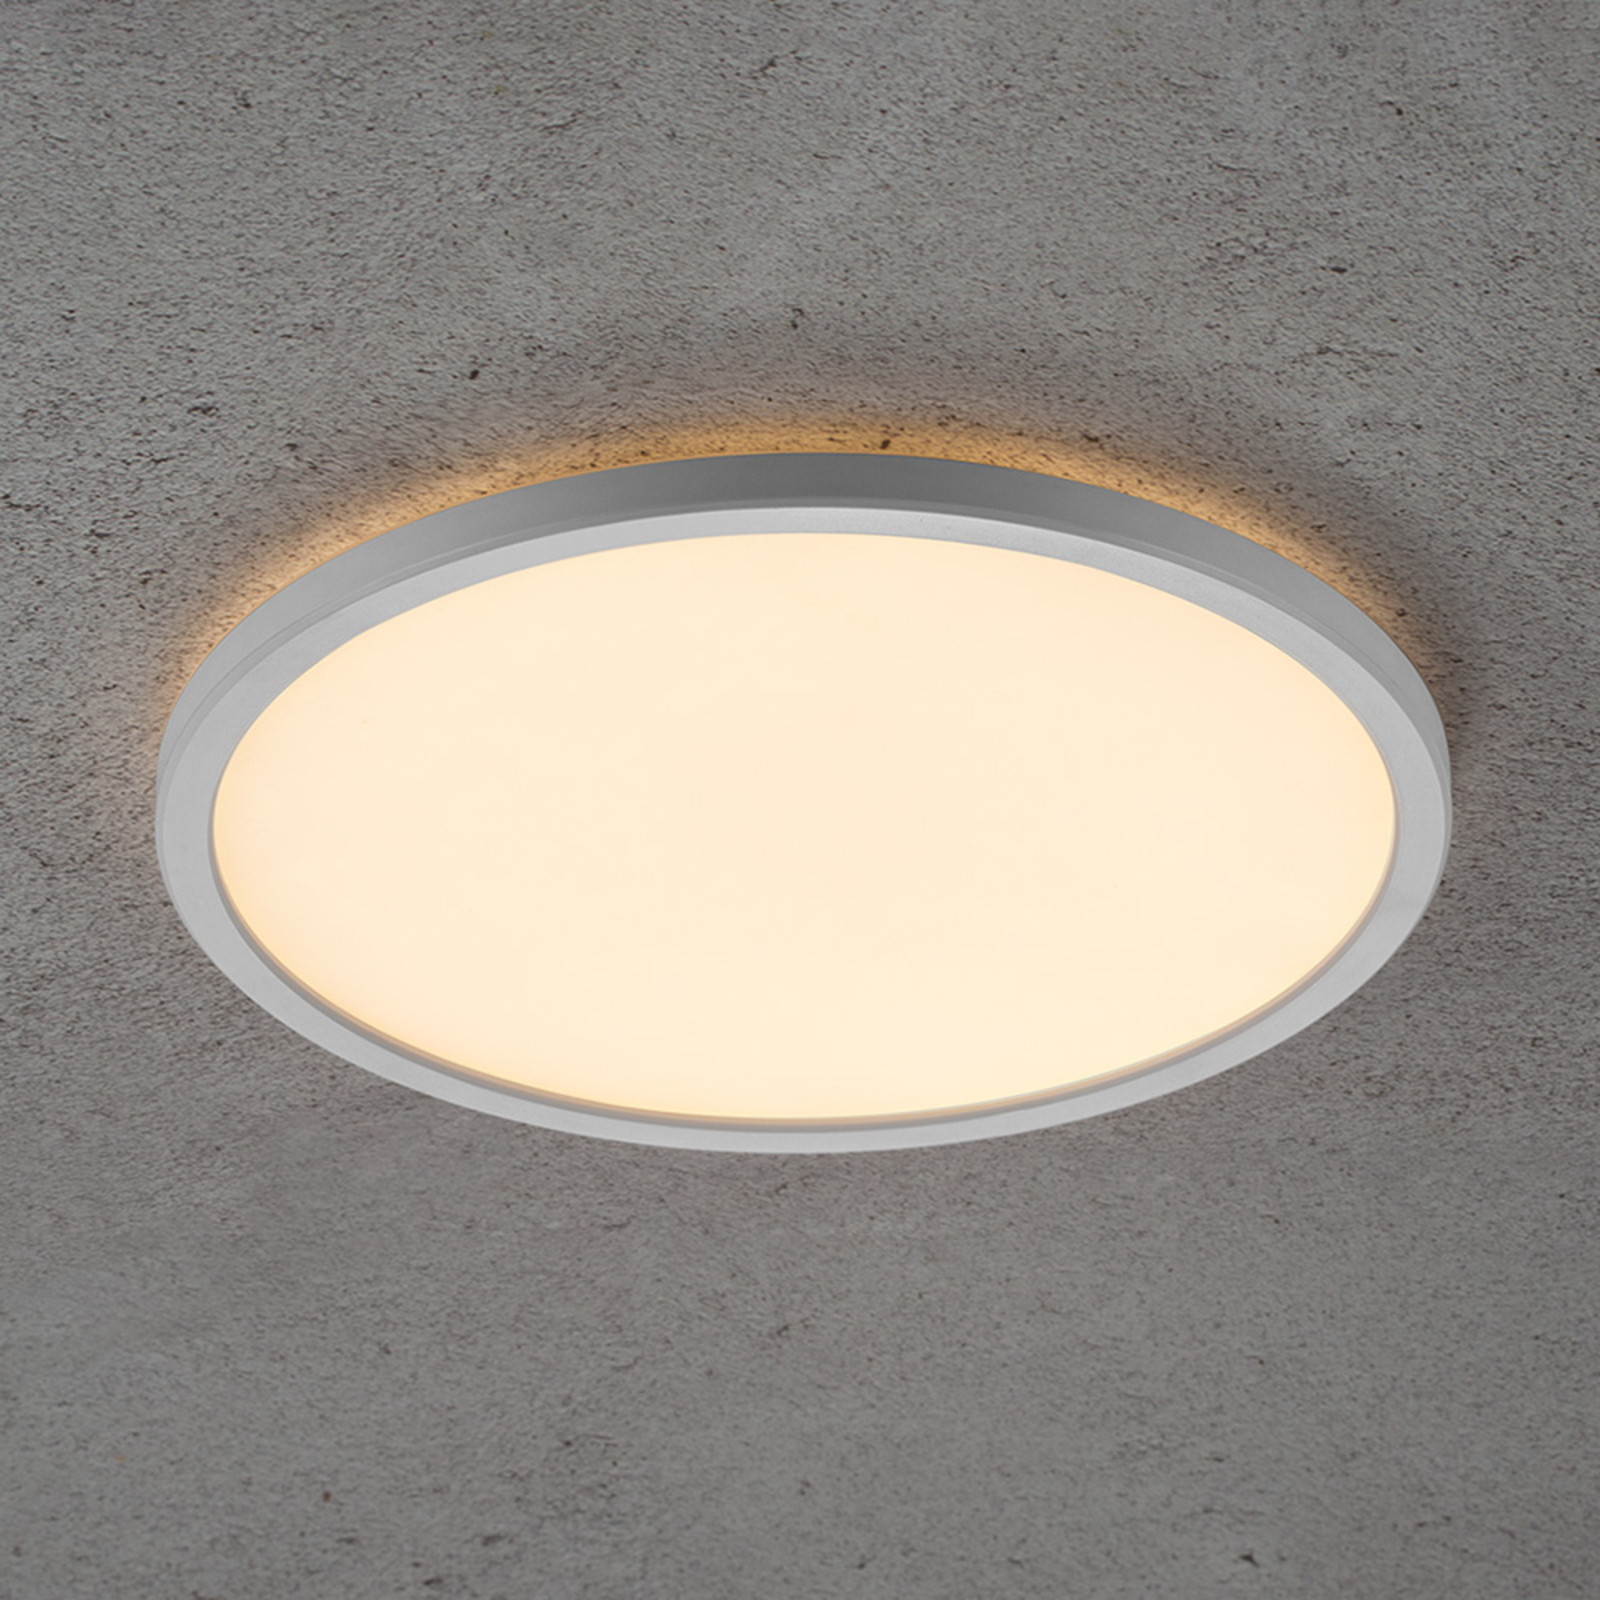 LED plafondlamp Planura, dimbaar, Ø 29 cm